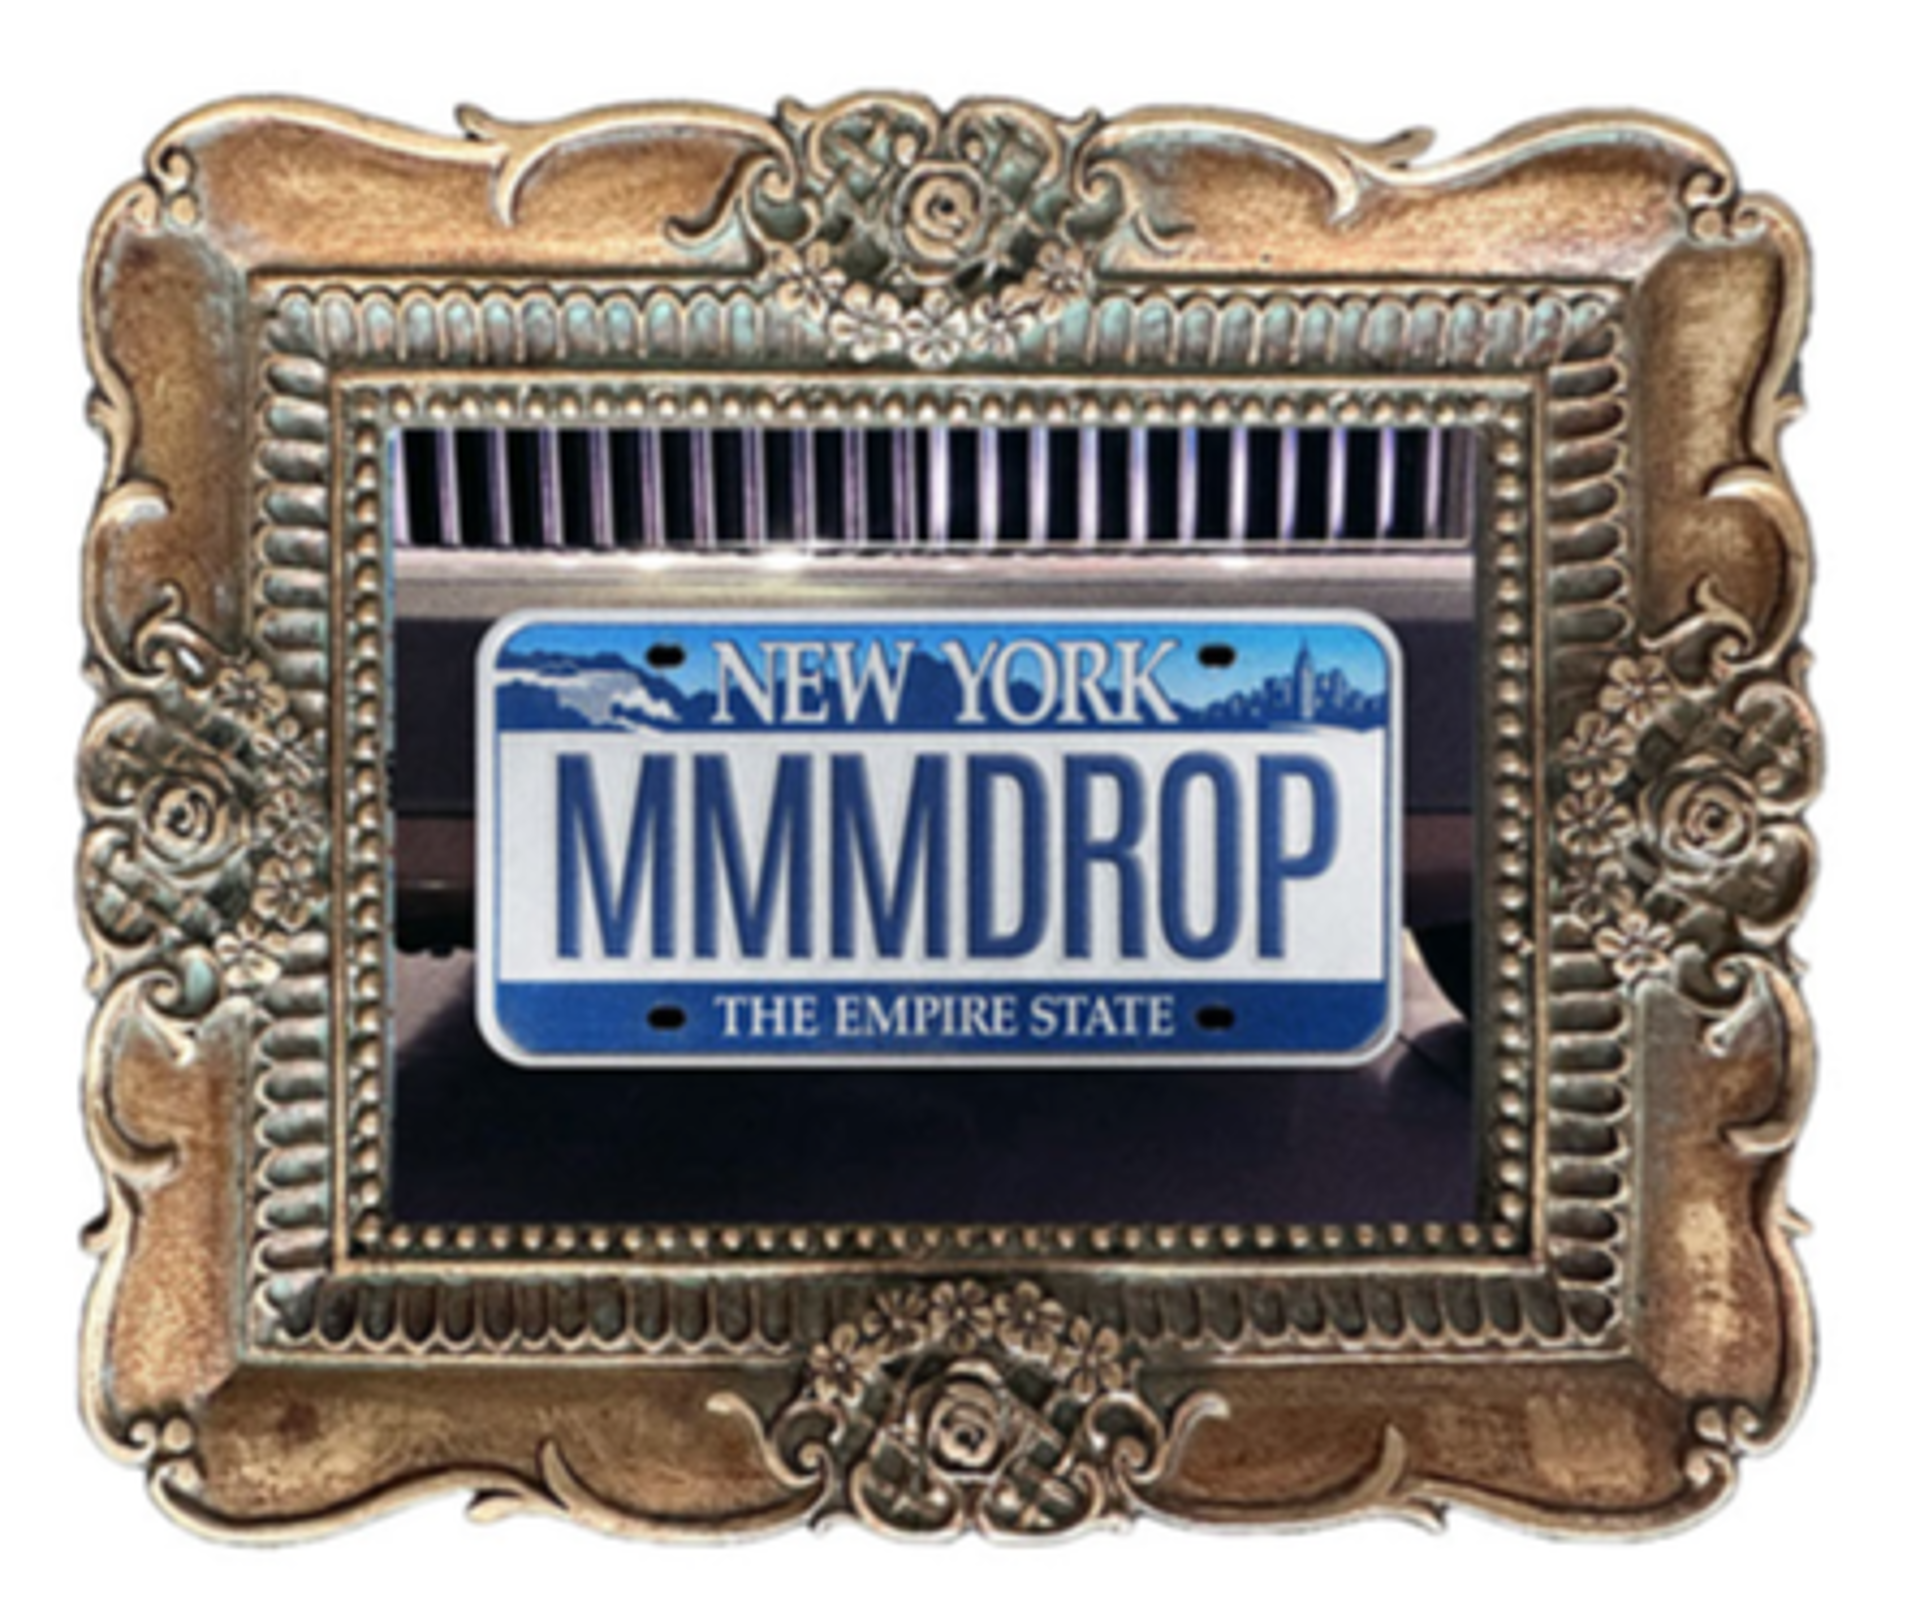 MMMDROP (mini) by David Schwartz